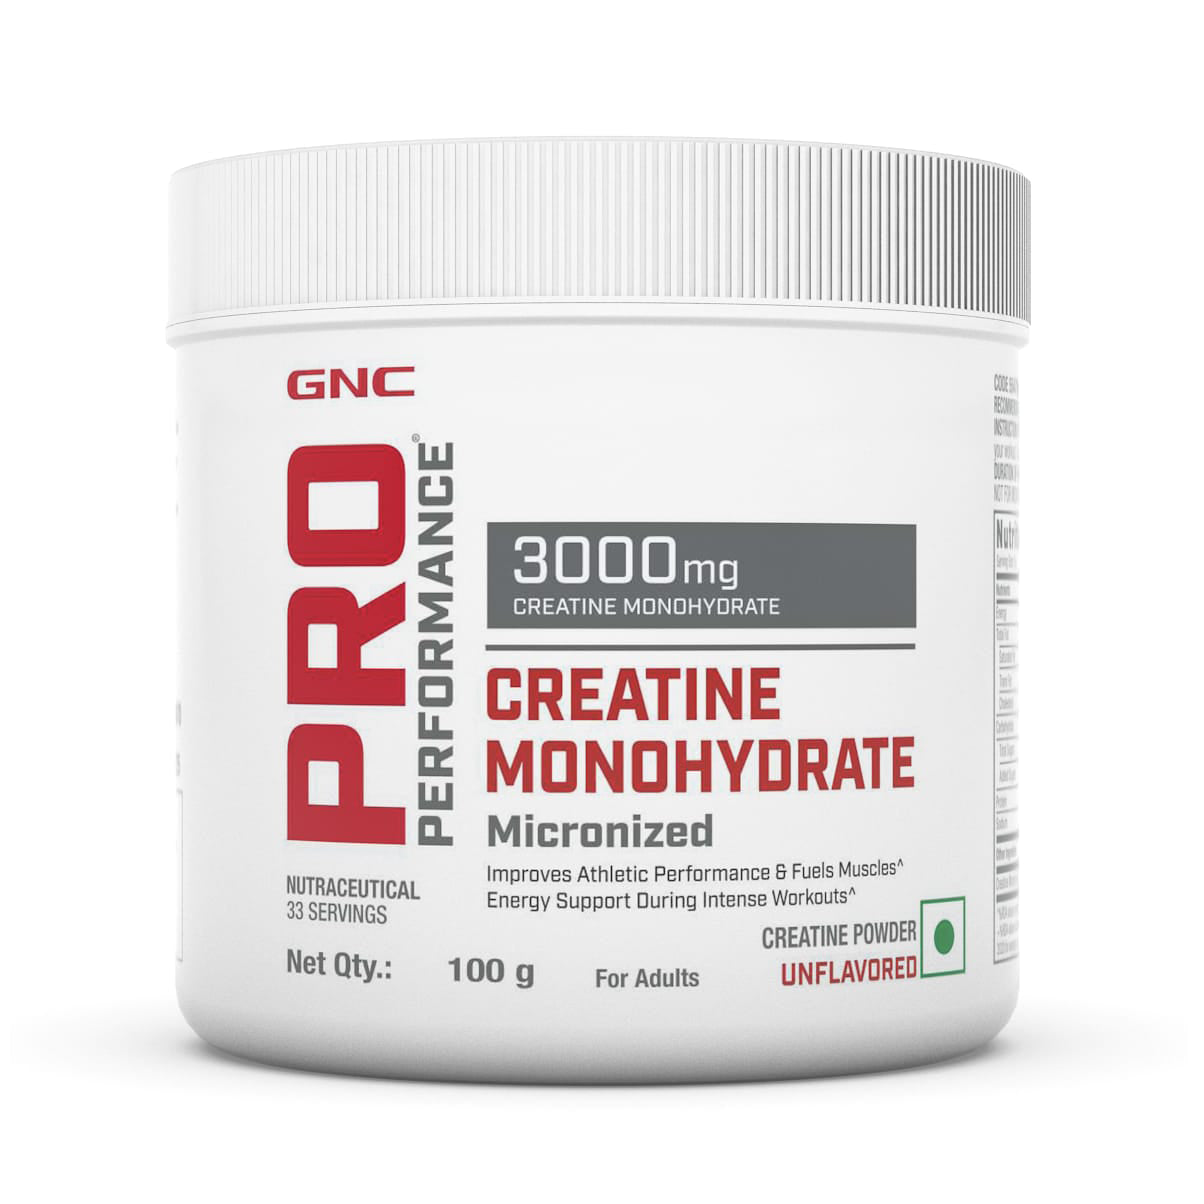 GNC Pro Performance Creatine Monohydrate (3000 mg)